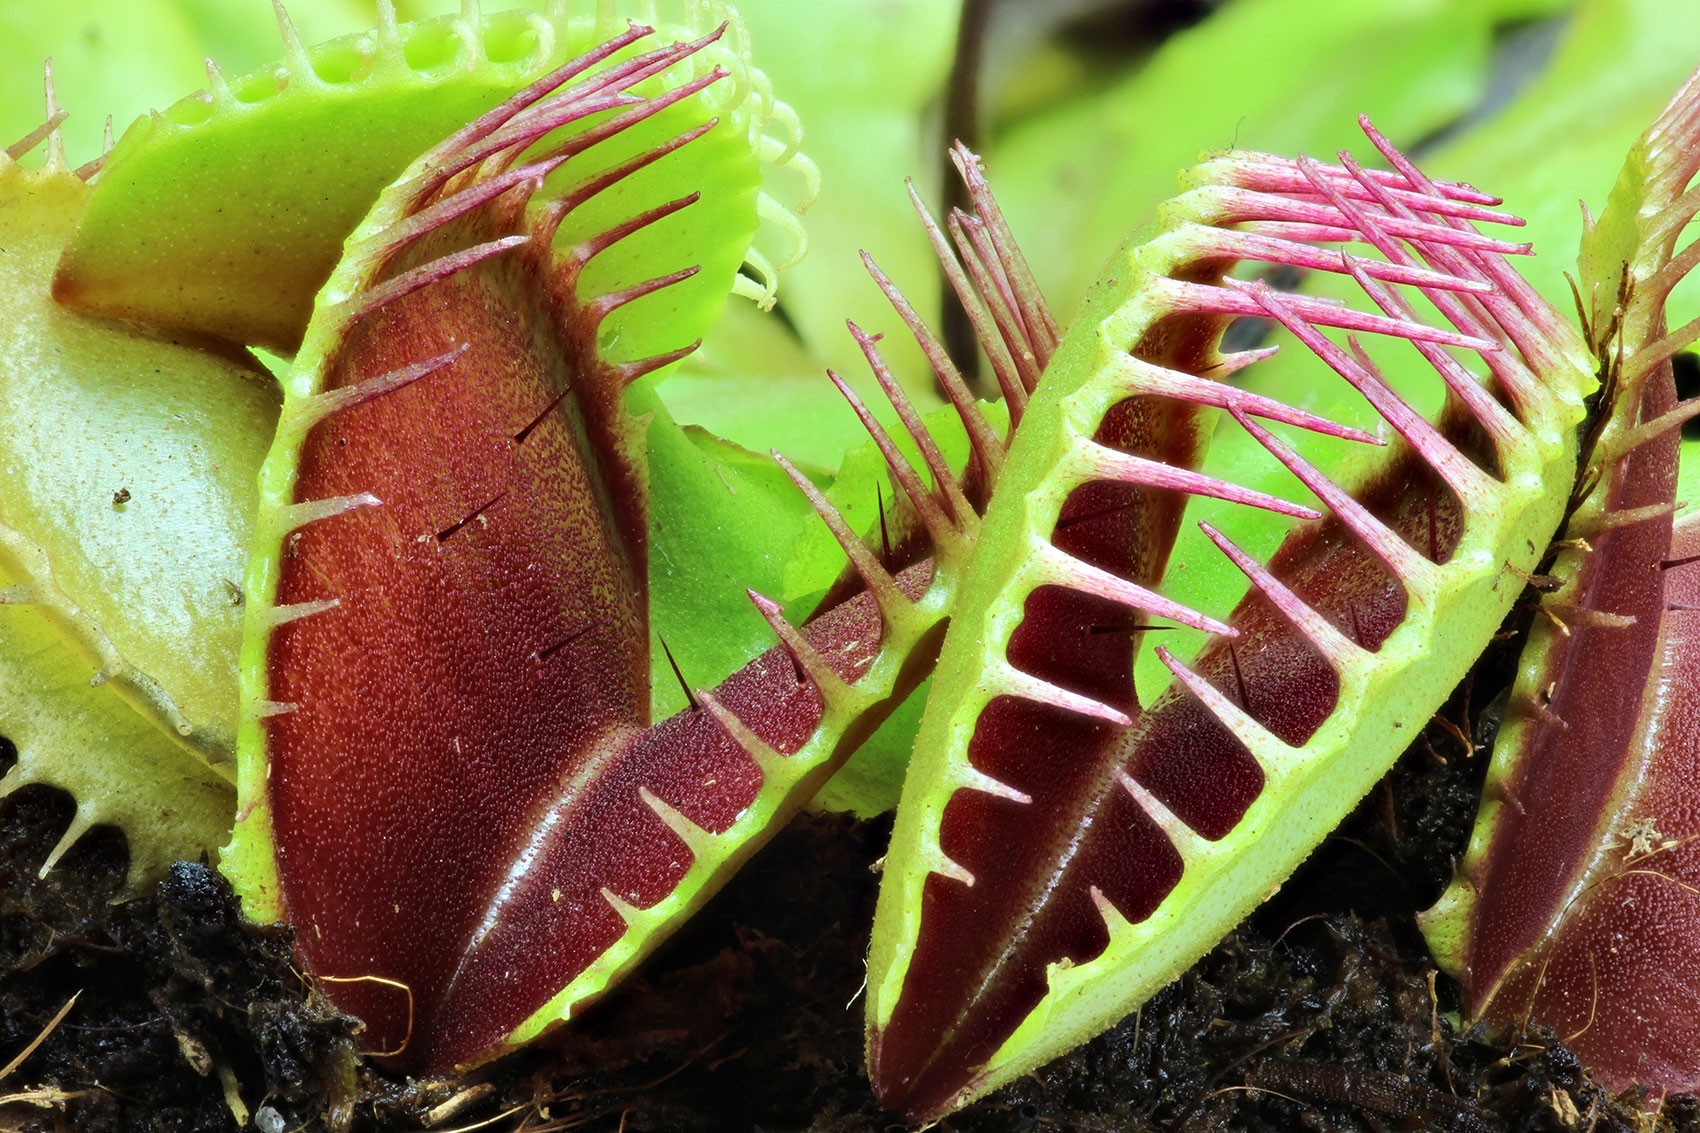 Venus flytrap /meat eating plant